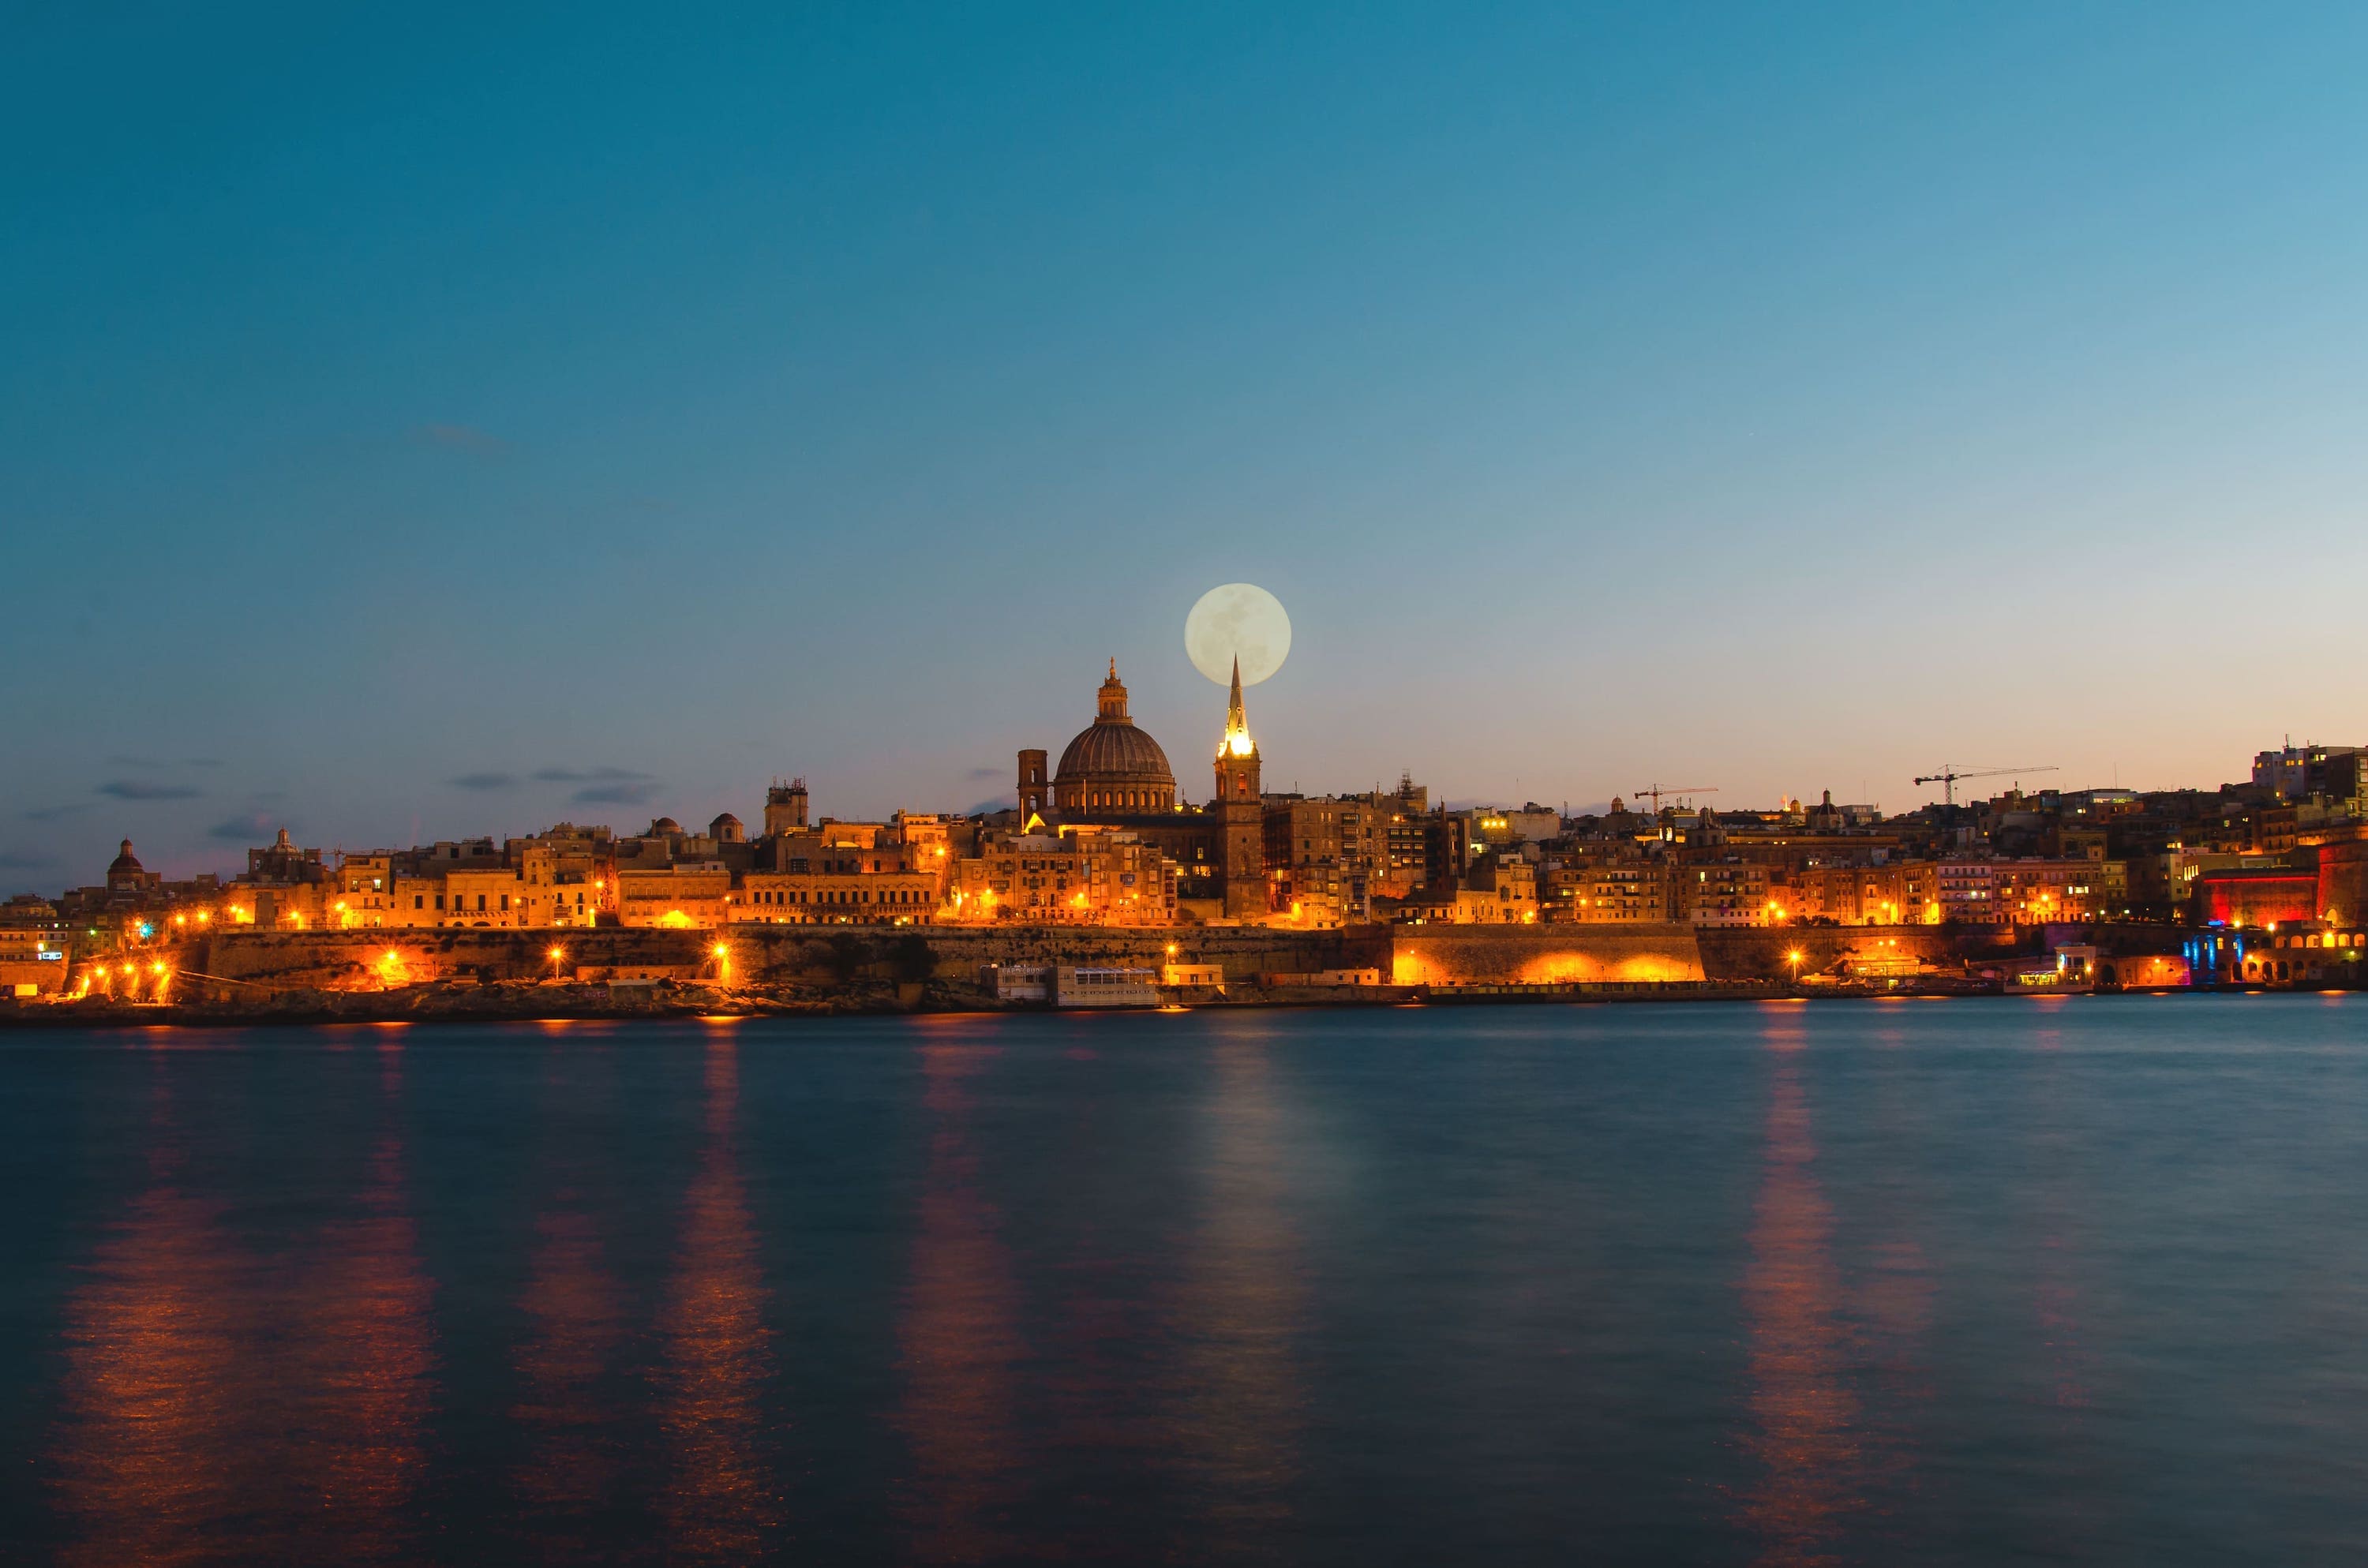 Night view of Malta's capital city: Valletta